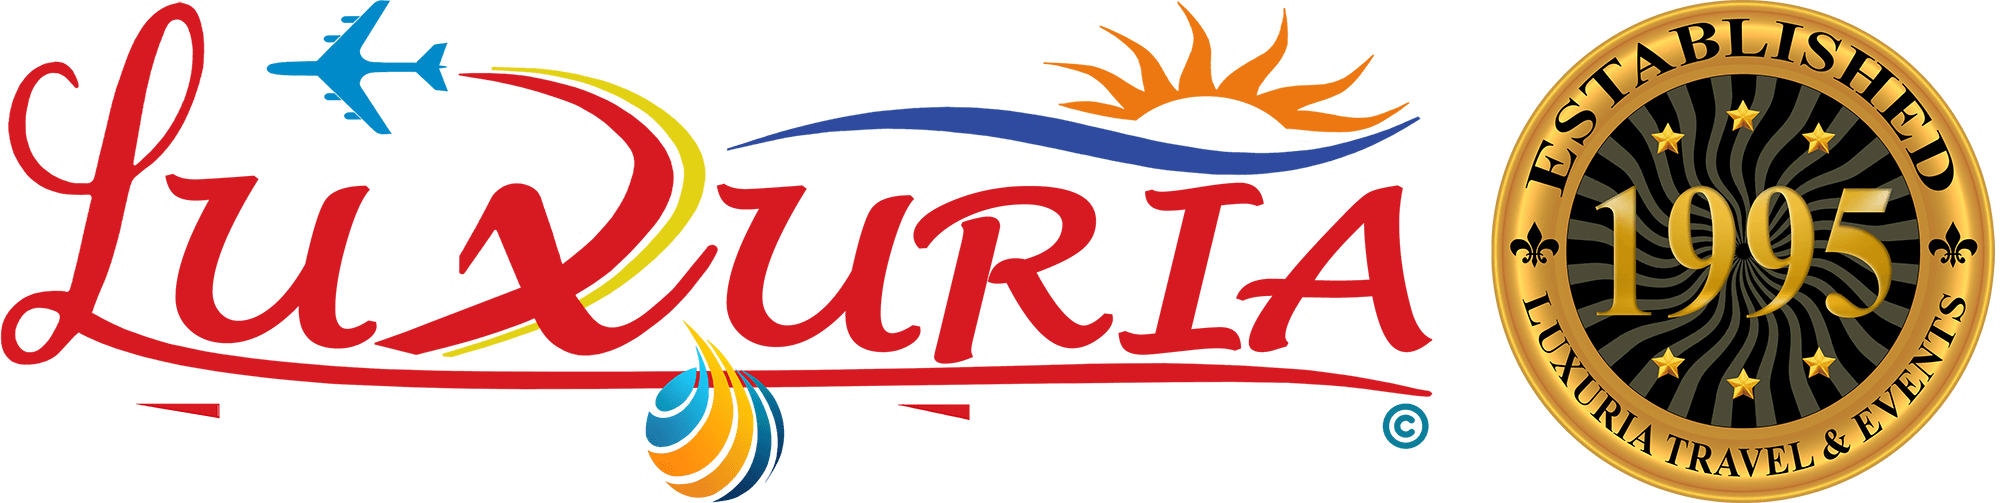 Luxuria Travel & Events | أين يعيش المليارديرات؟ ⋆ Luxuria Travel & Events